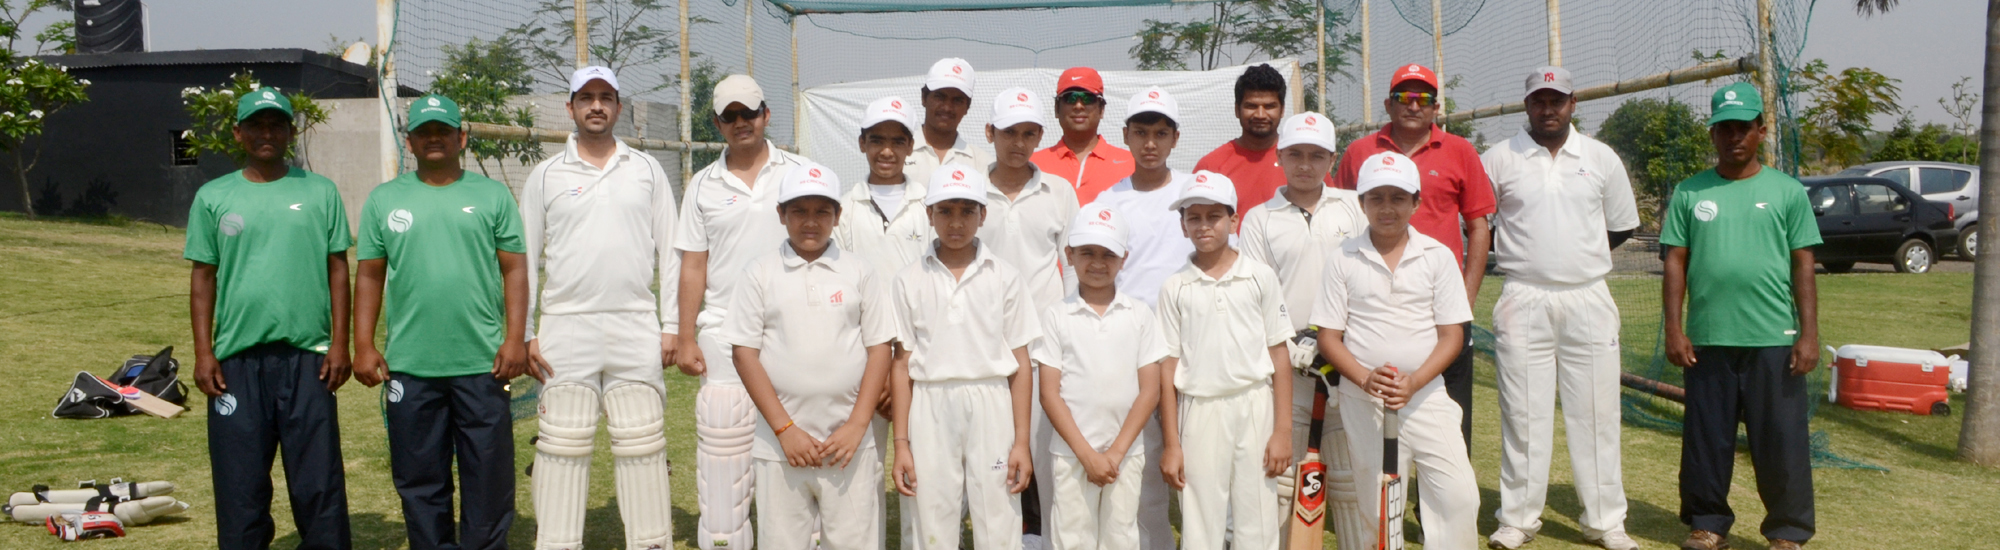 SS Cricket Club Team